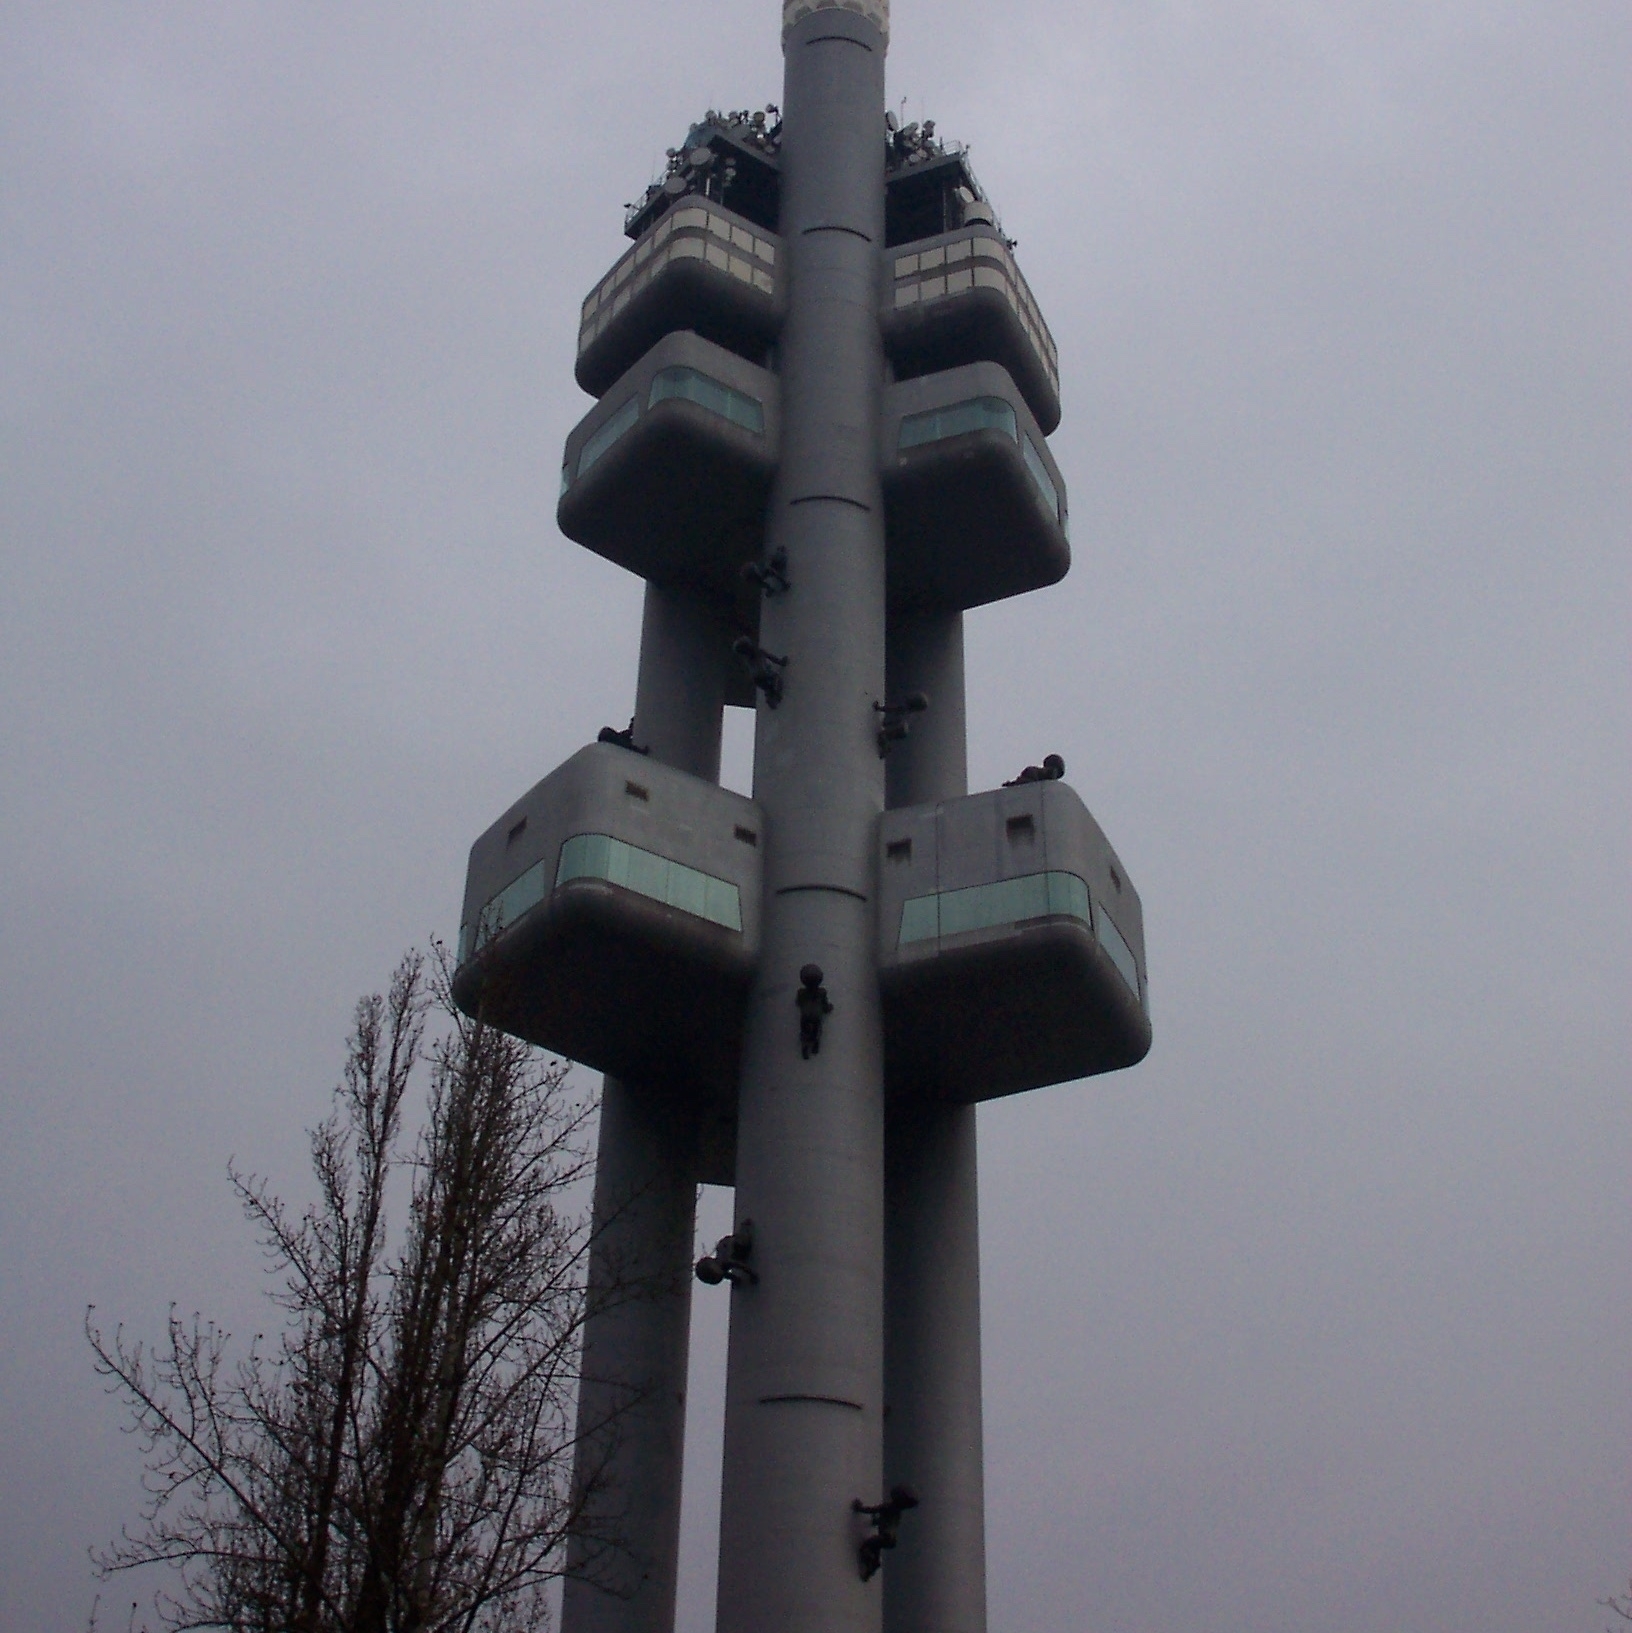 Zizkov TV tower with baby sculptures